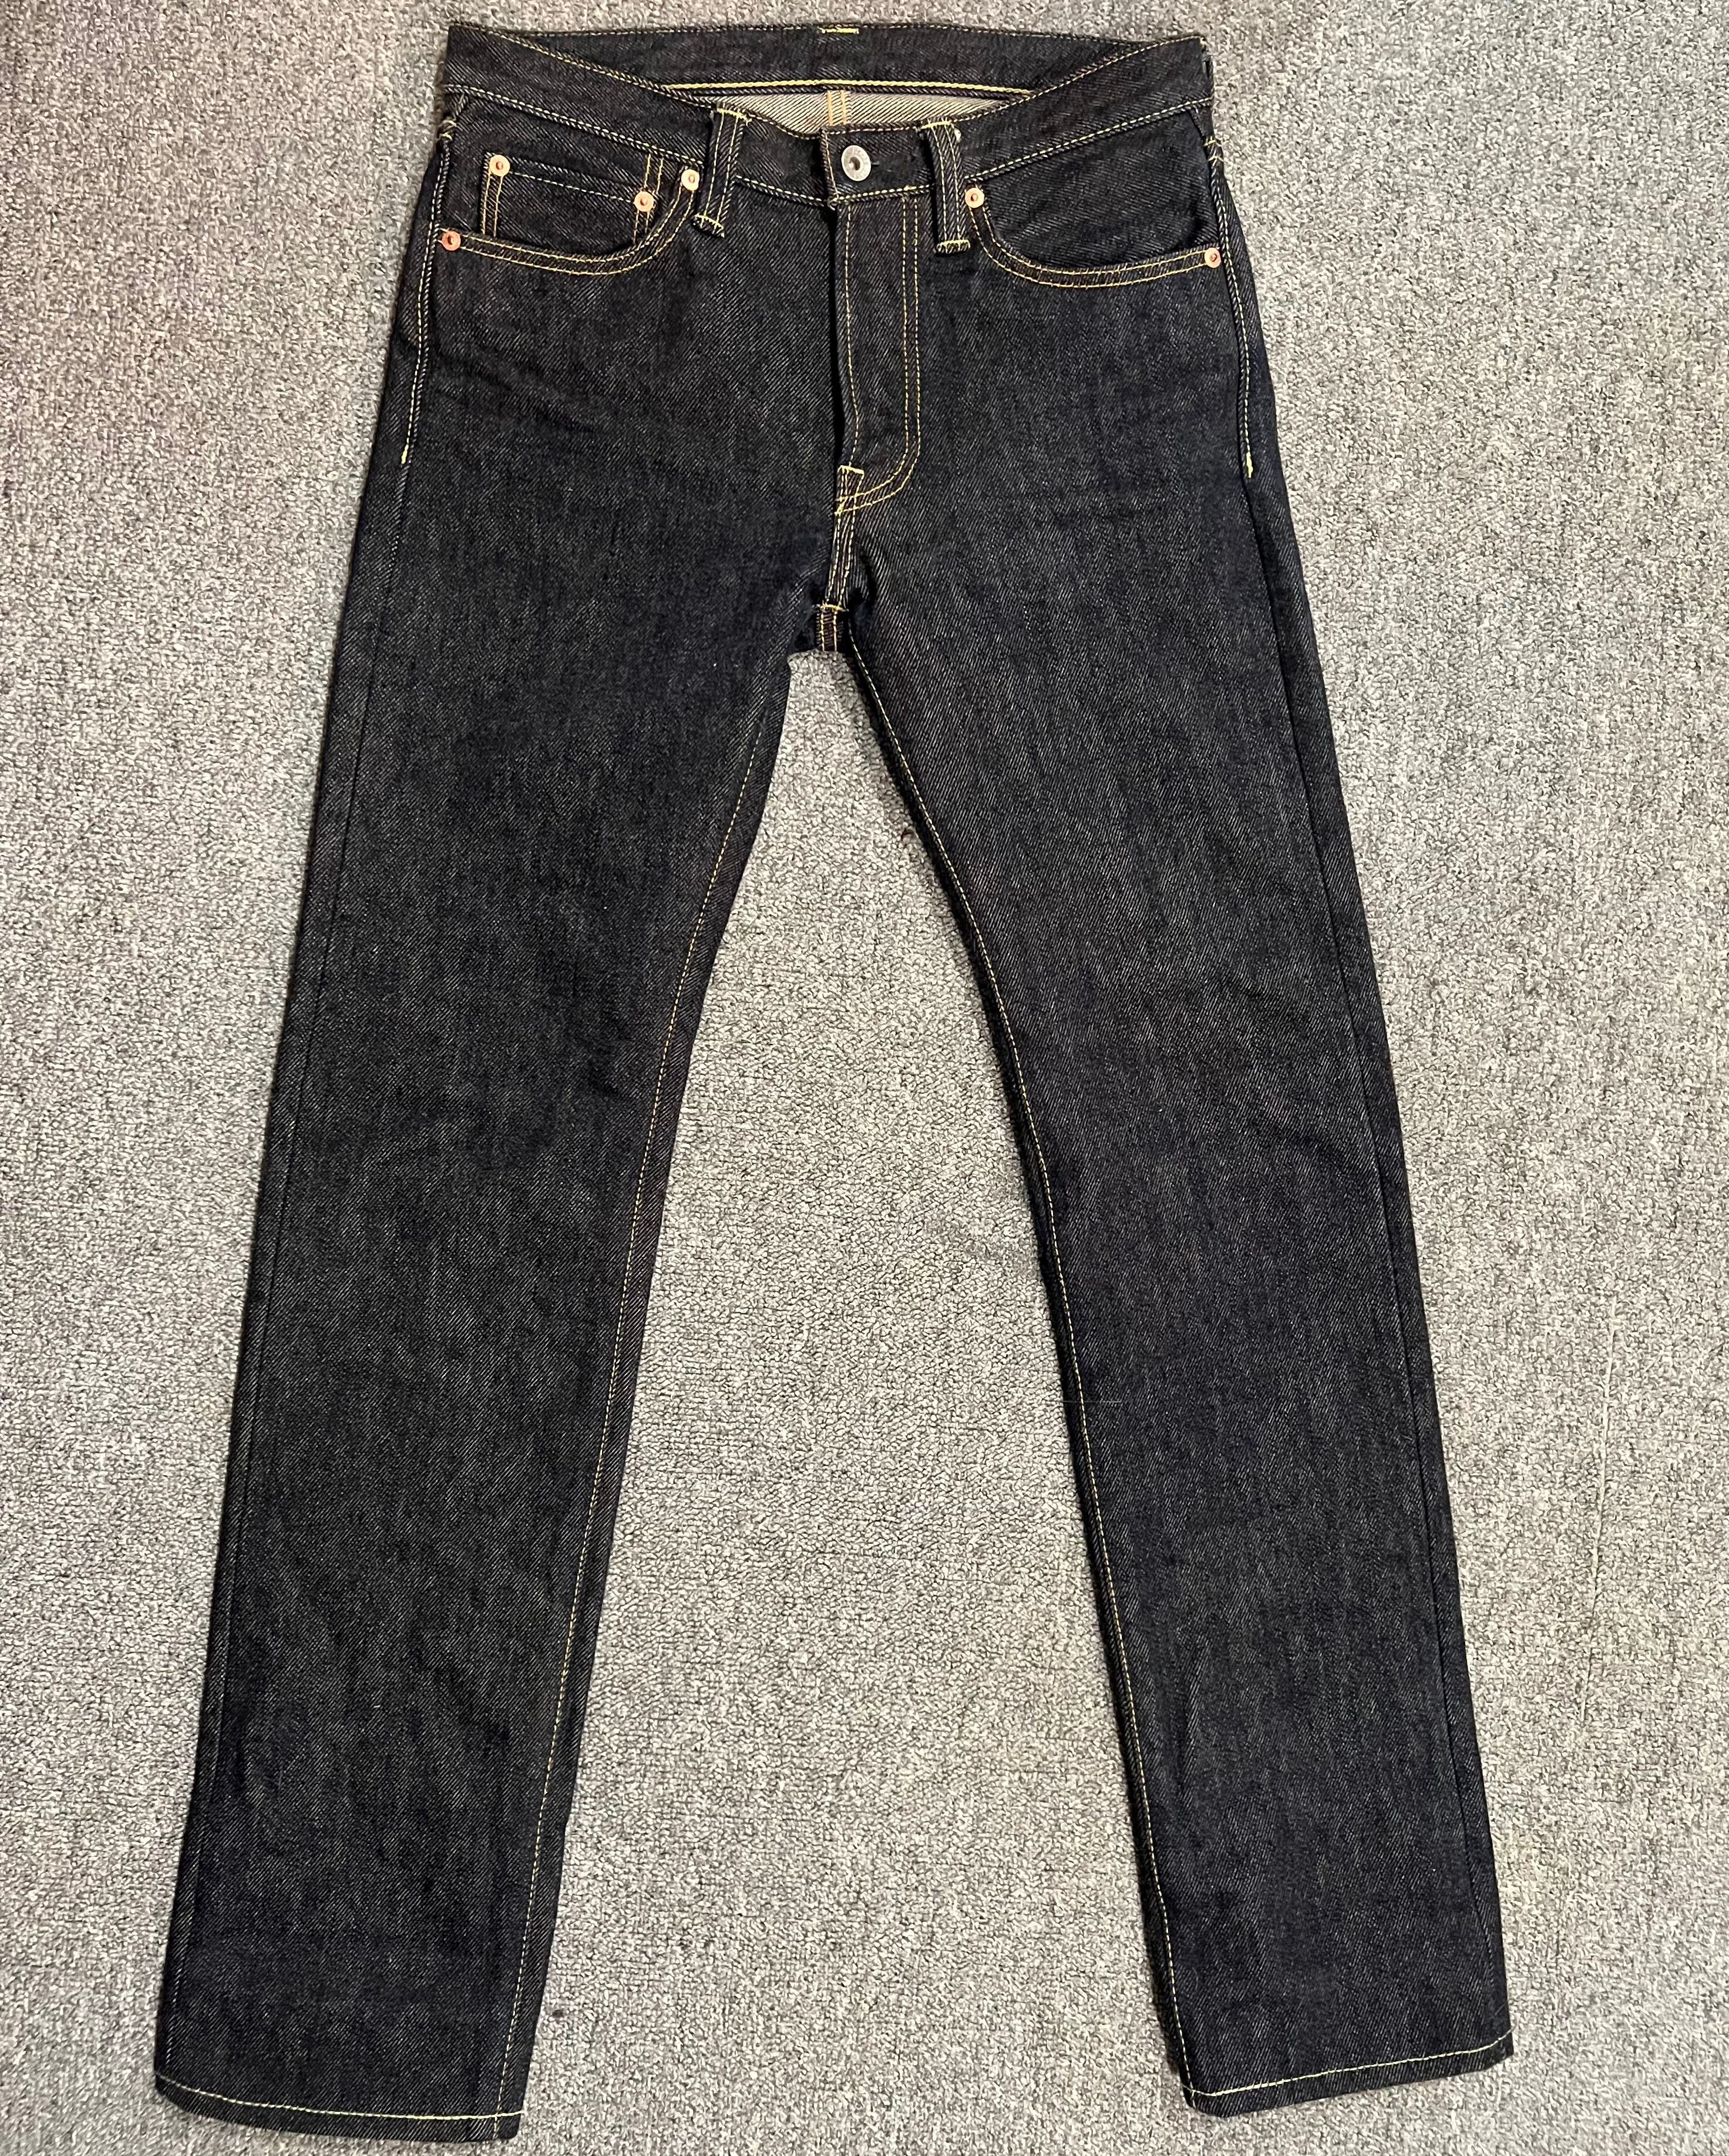 Iron Heart Iron Heart 21oz Selvedge Denim Straight Cut Jeans IH-666S-21 Size US 30 / EU 46 - 1 Preview